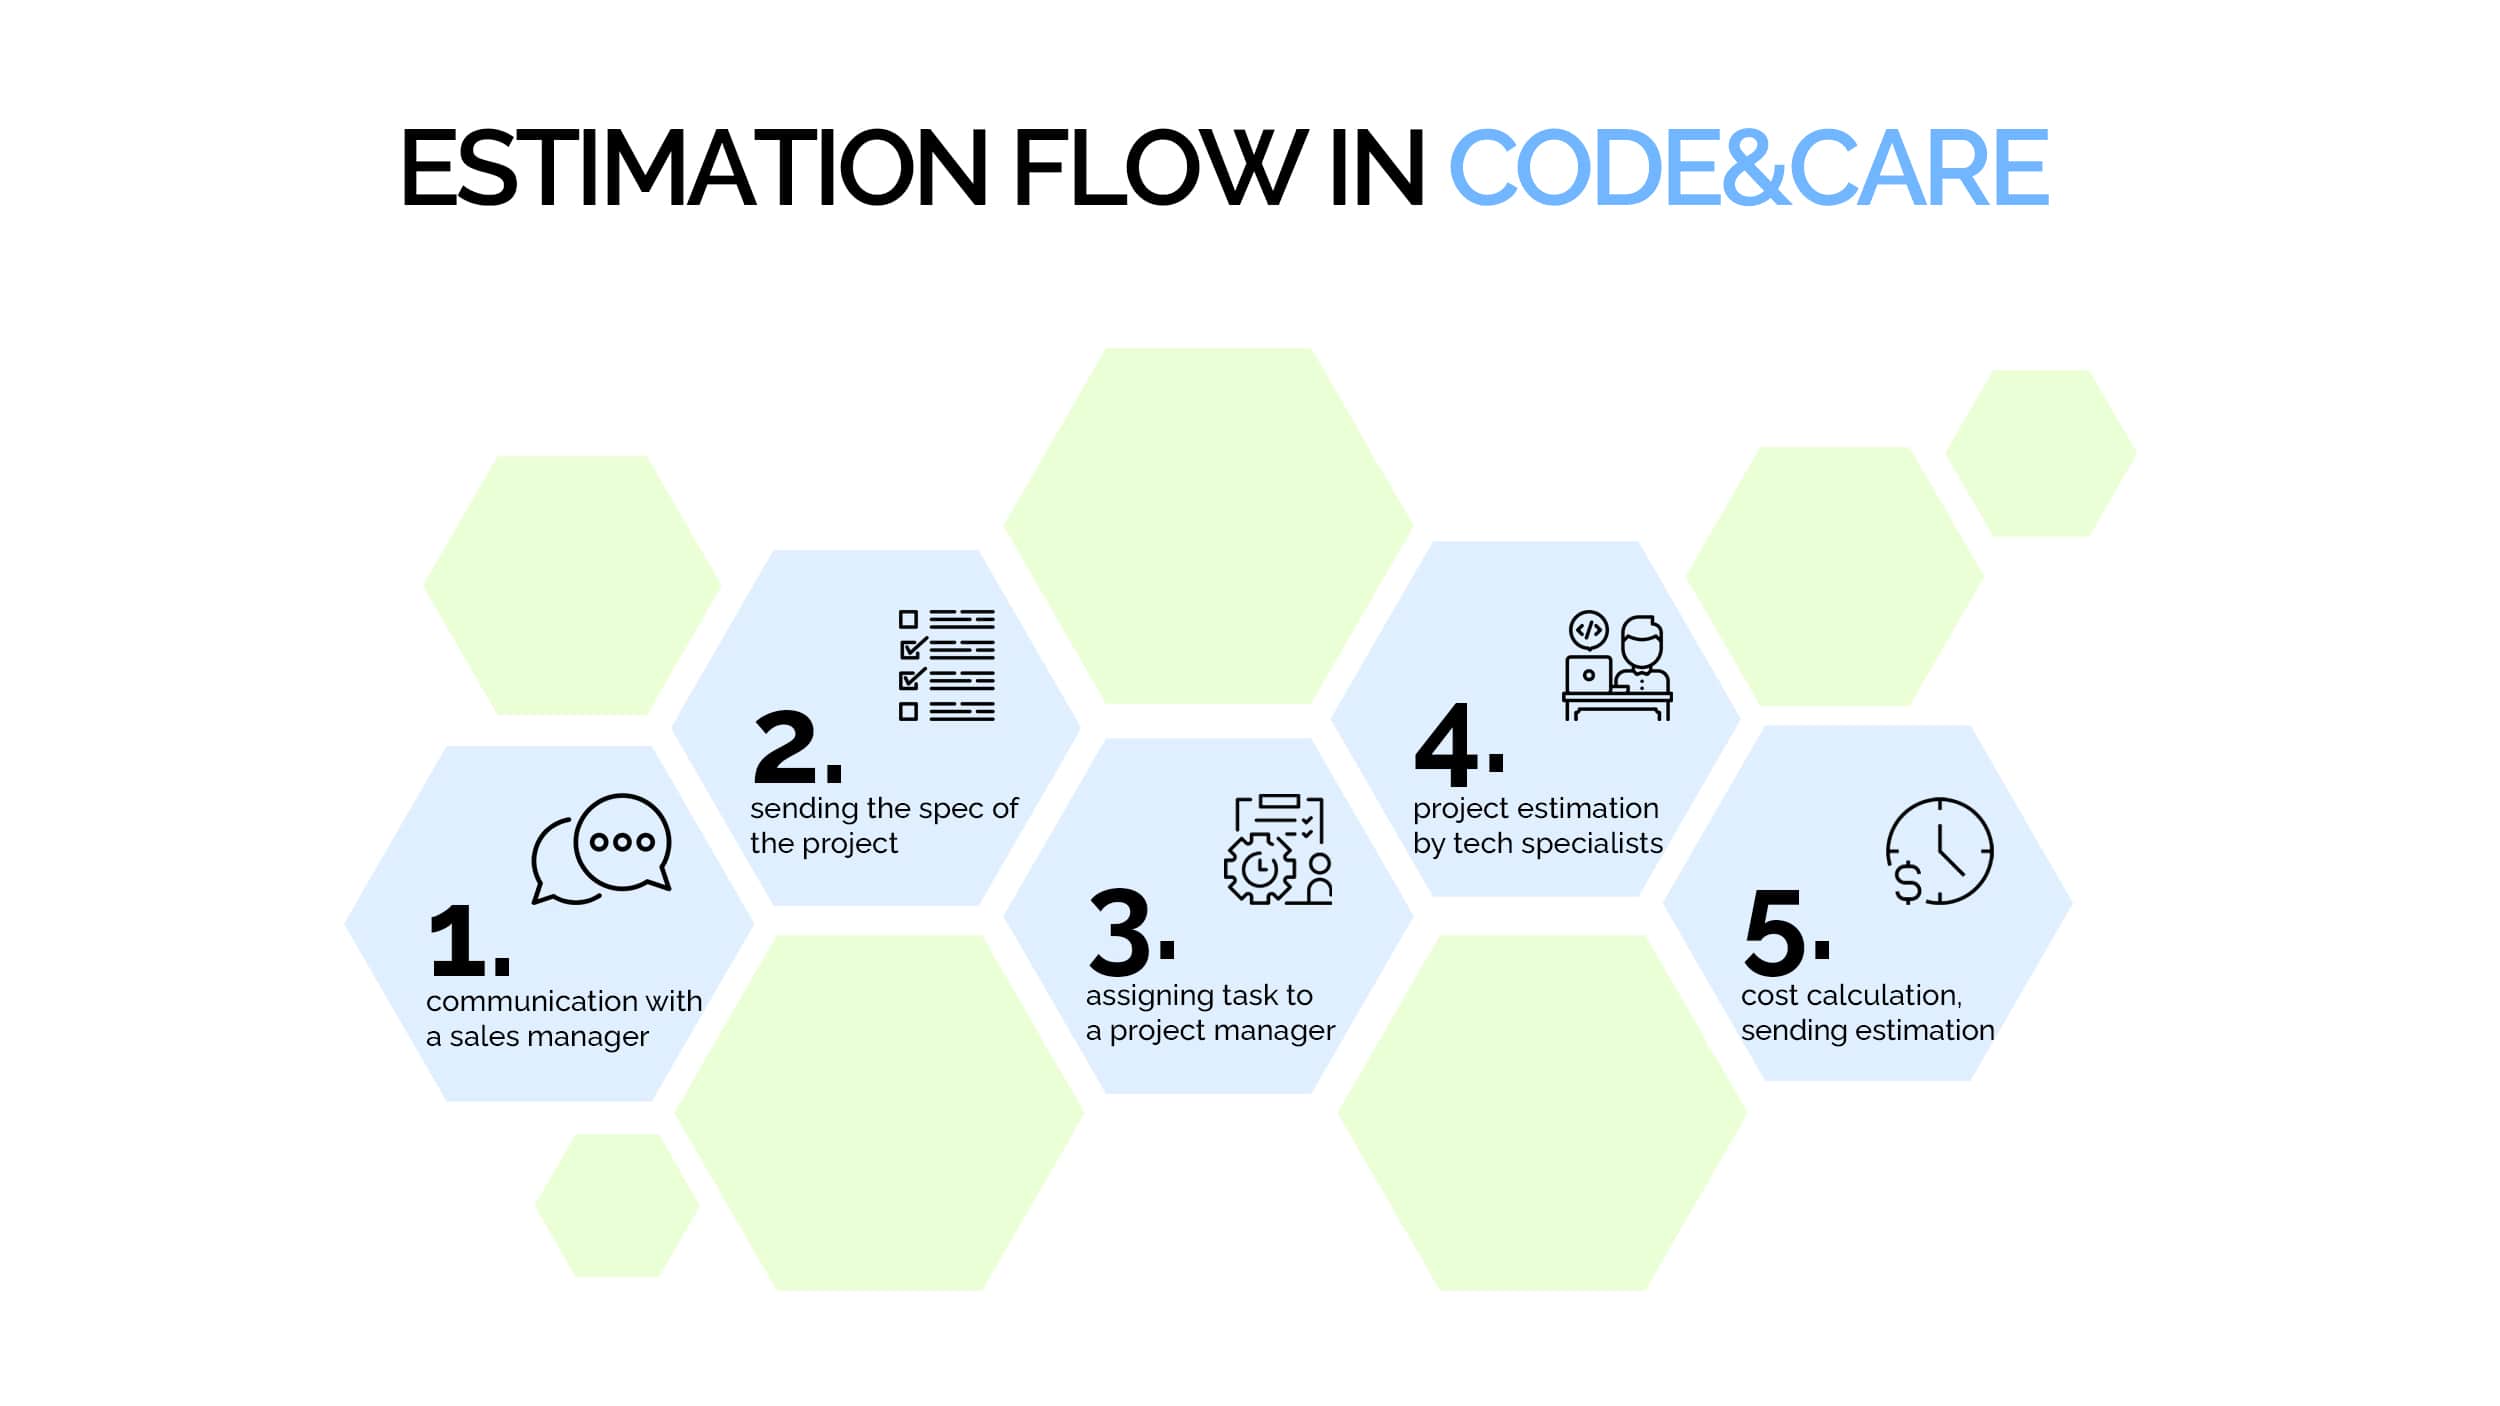 Estimation flow in Code&Care